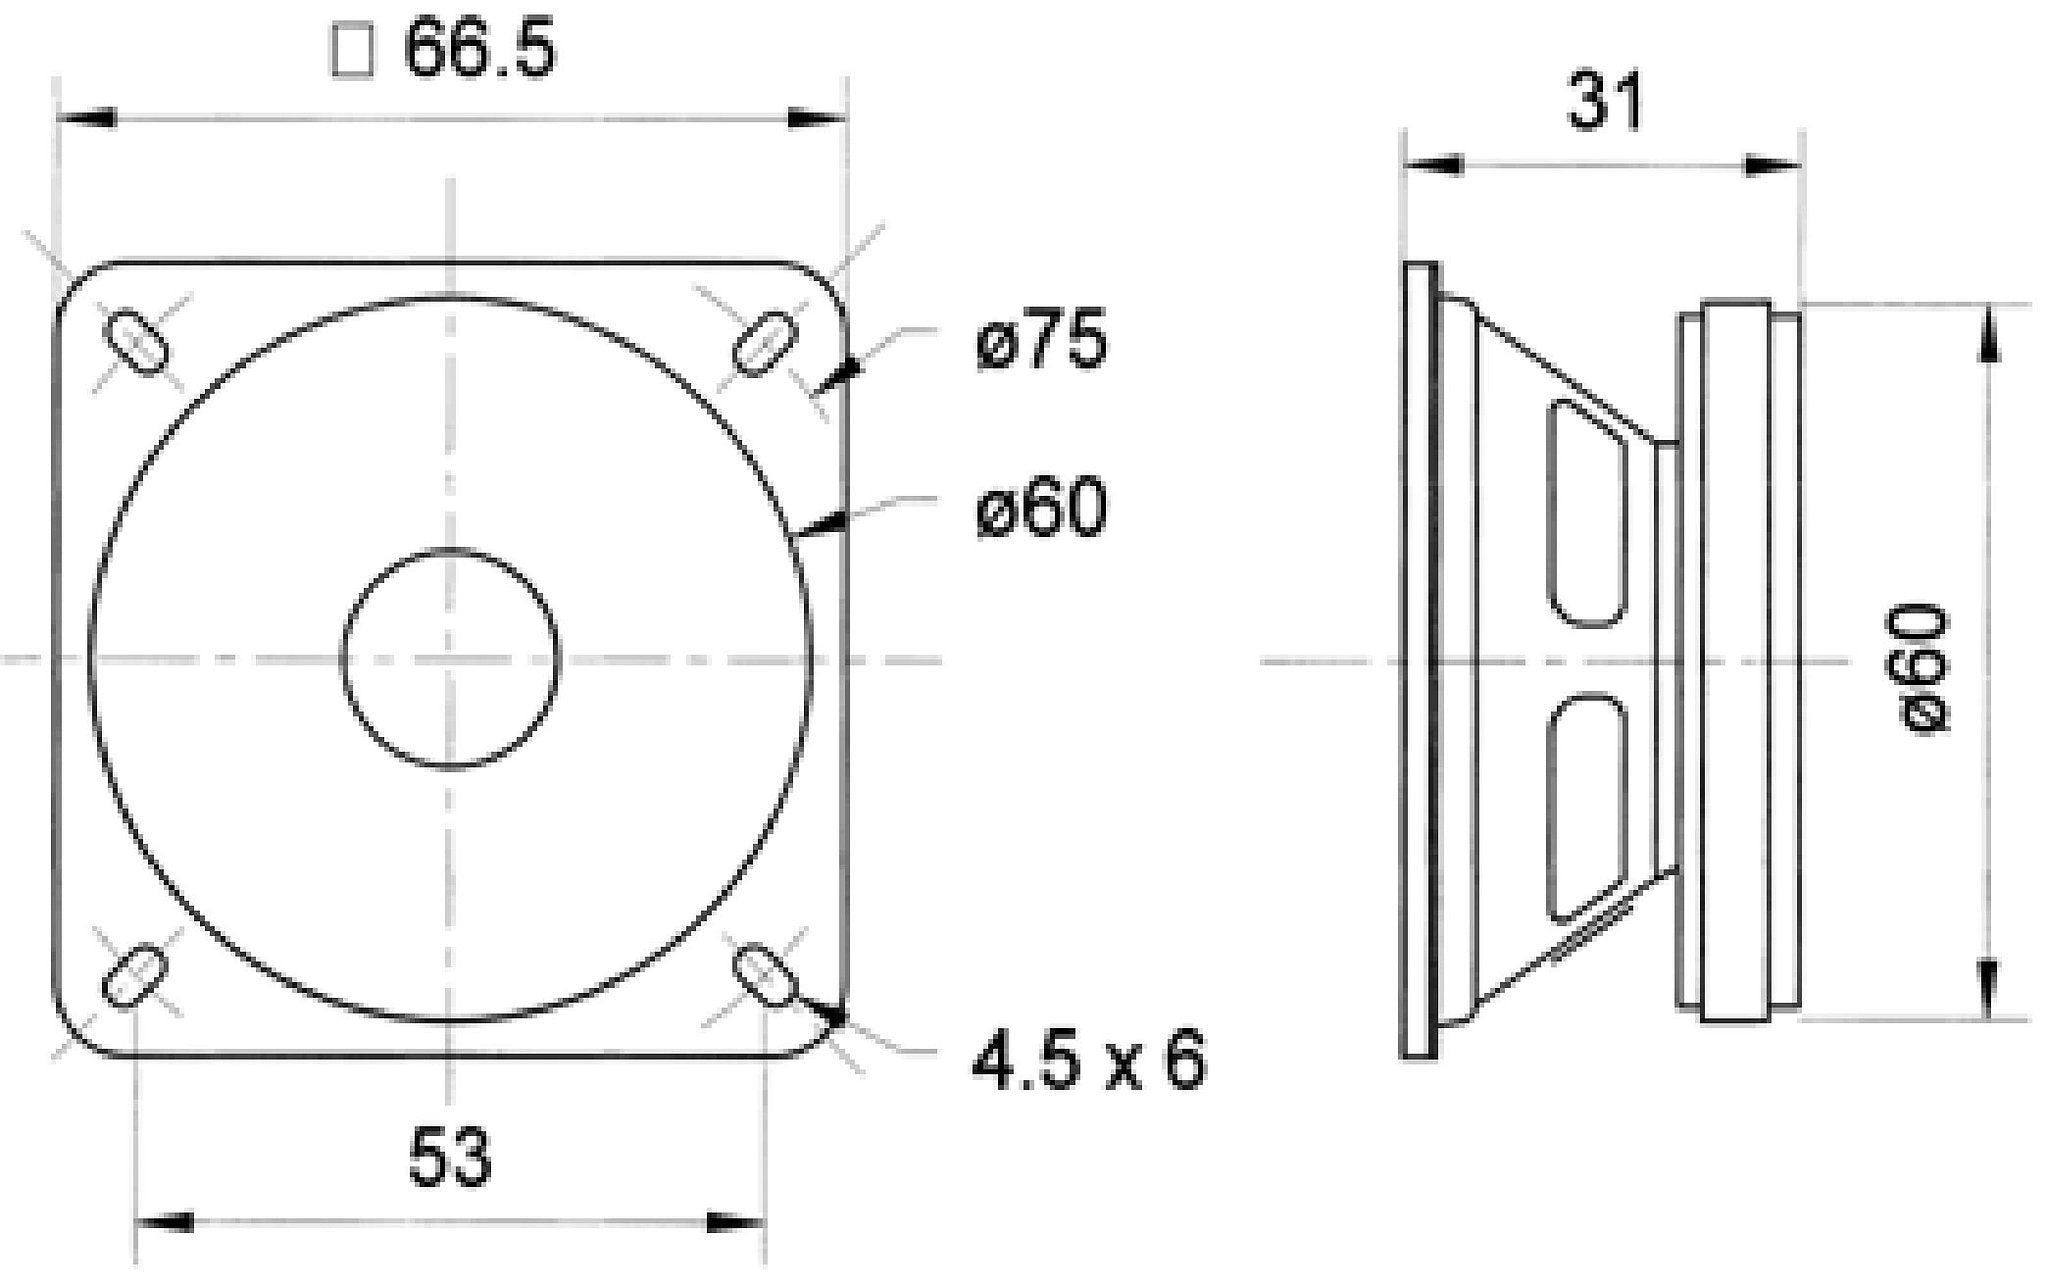 Visaton FRS 7 S - 8 Ohm - 6,5 cm (2,5") full-range luidspreker